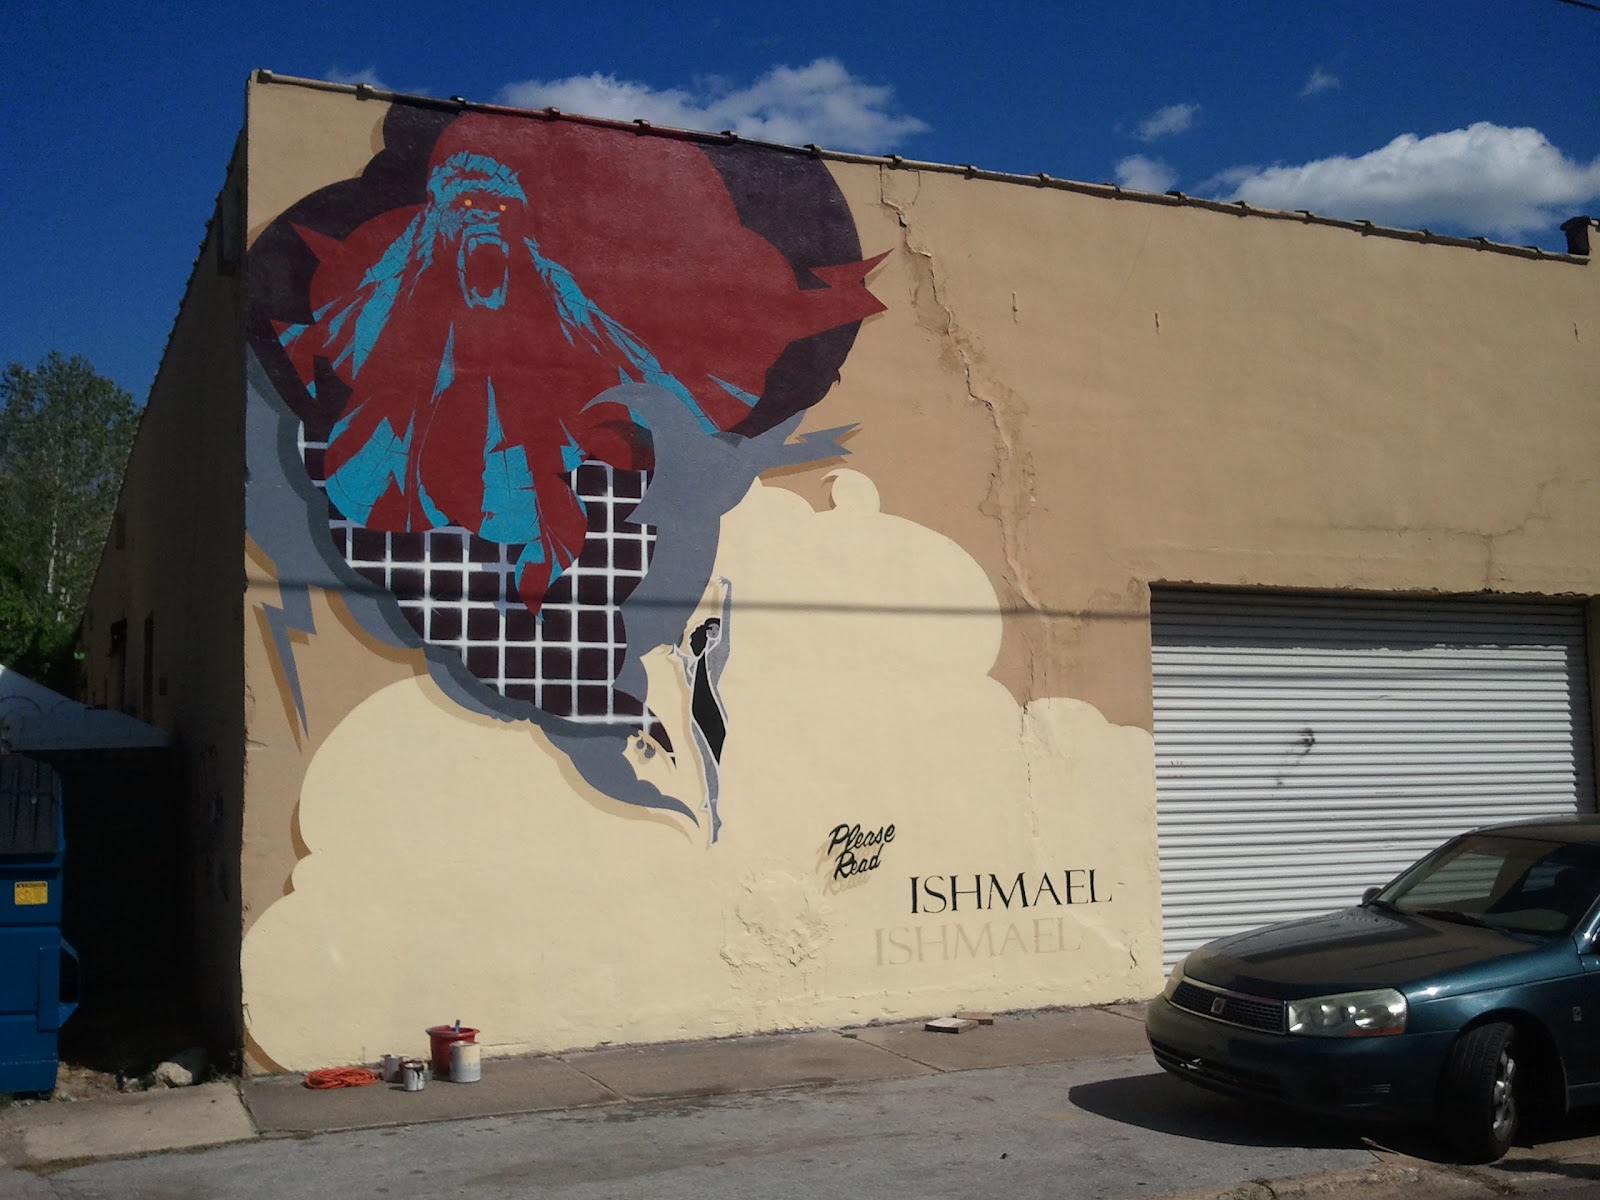 Ishmael Inspired Art And Graffiti 03 27 12